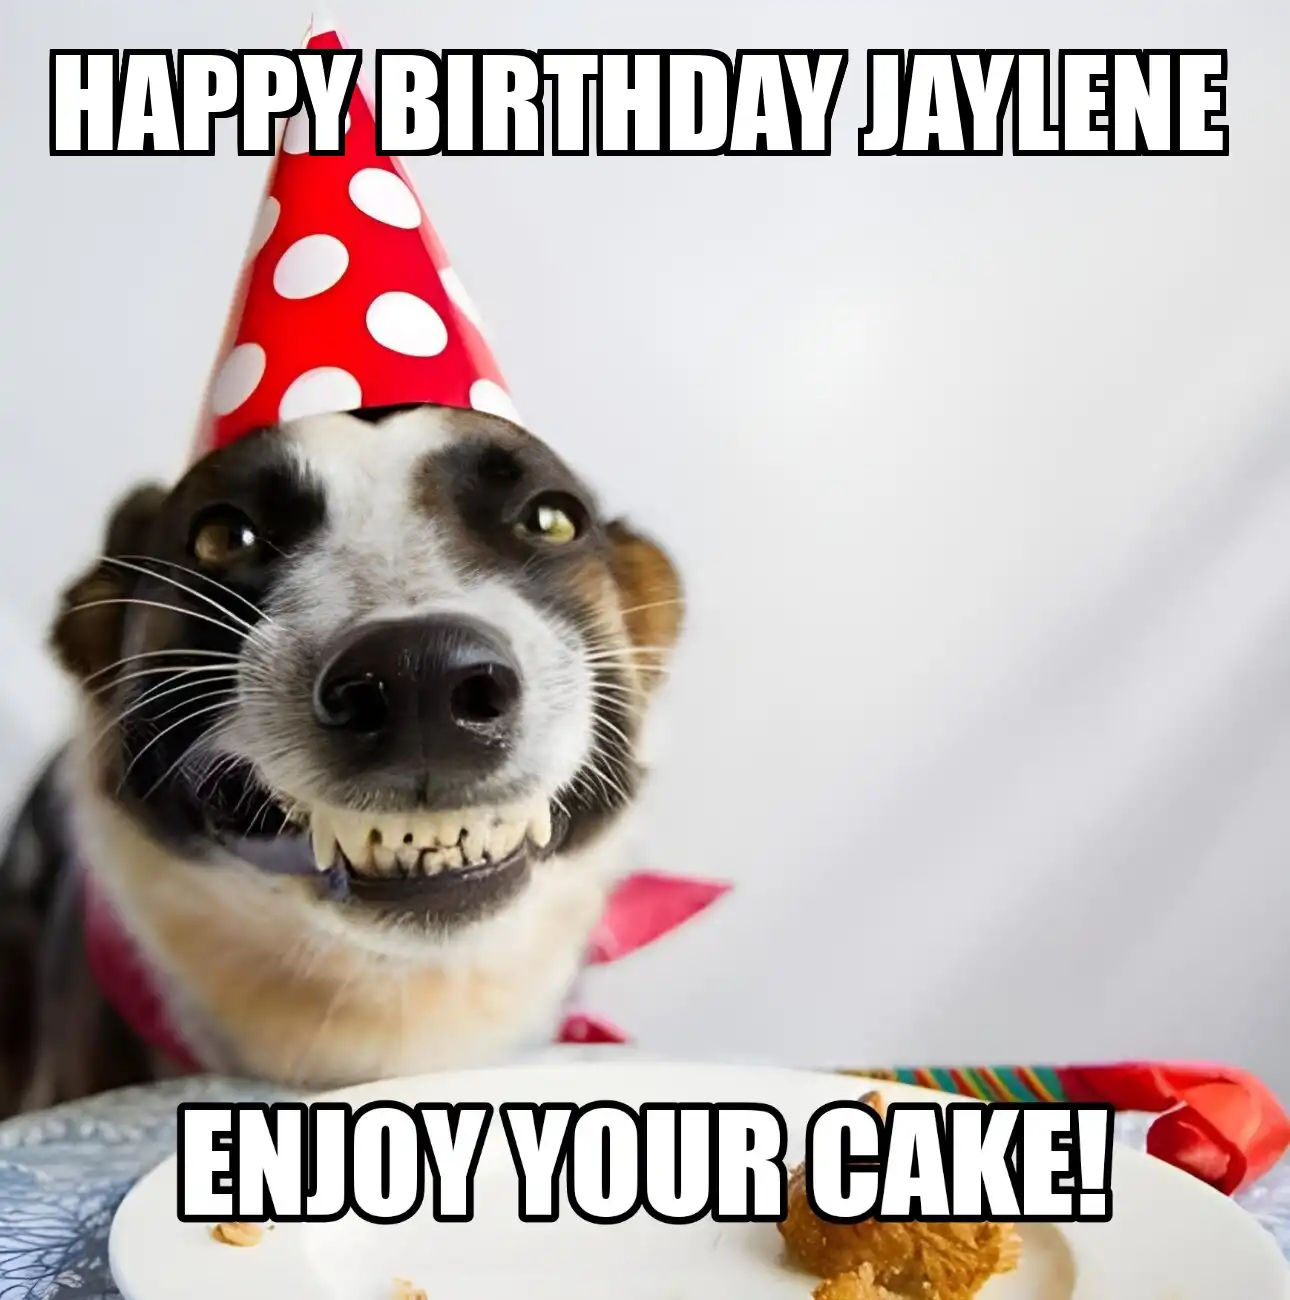 Happy Birthday Jaylene Enjoy Your Cake Dog Meme